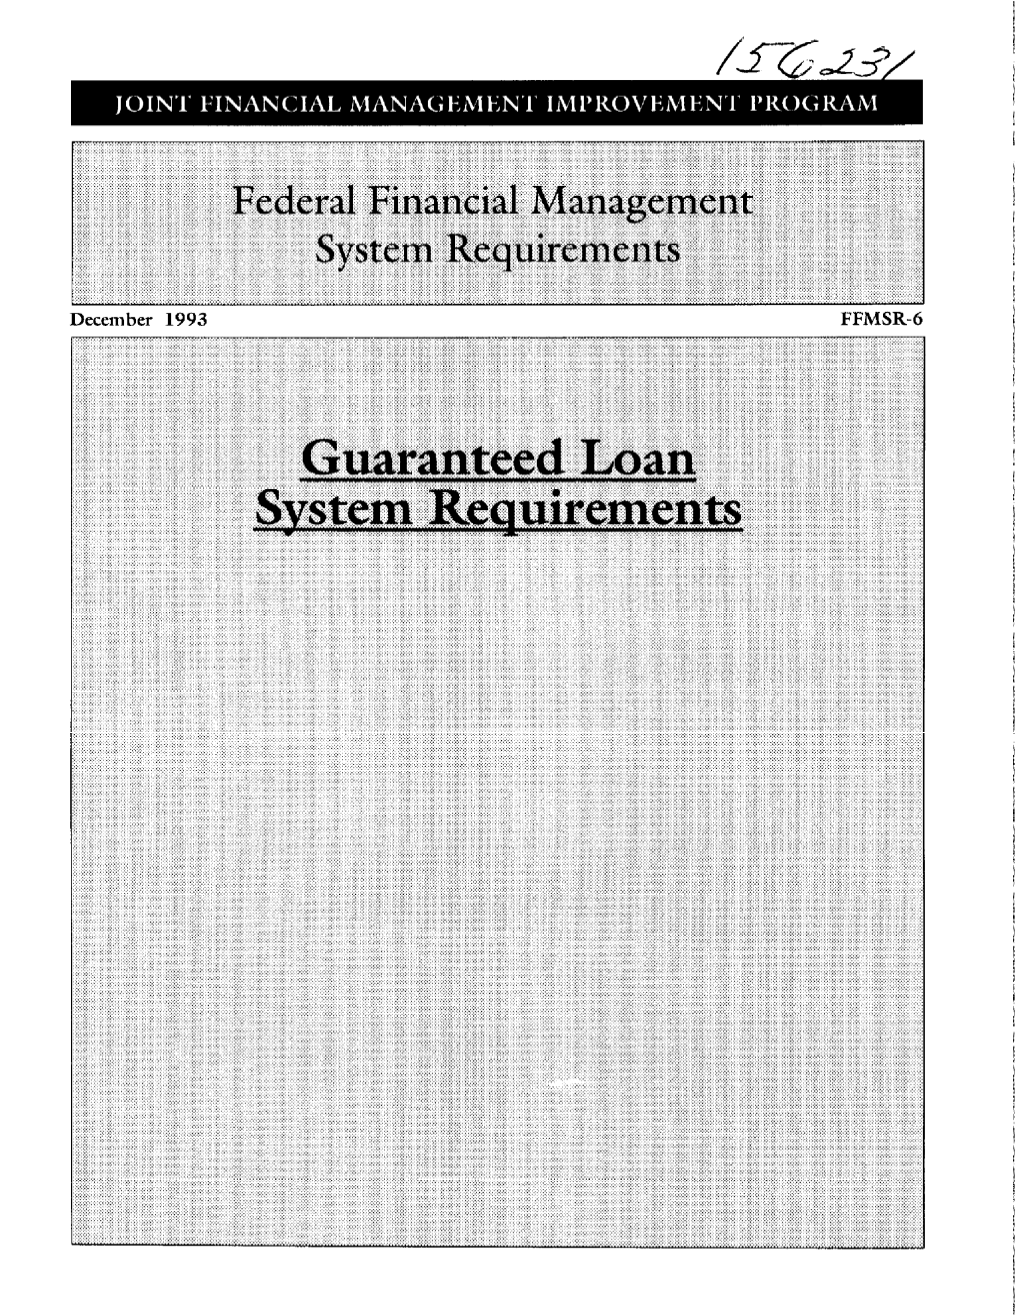 FFMSR-6 Guaranteed Loan System Requirements